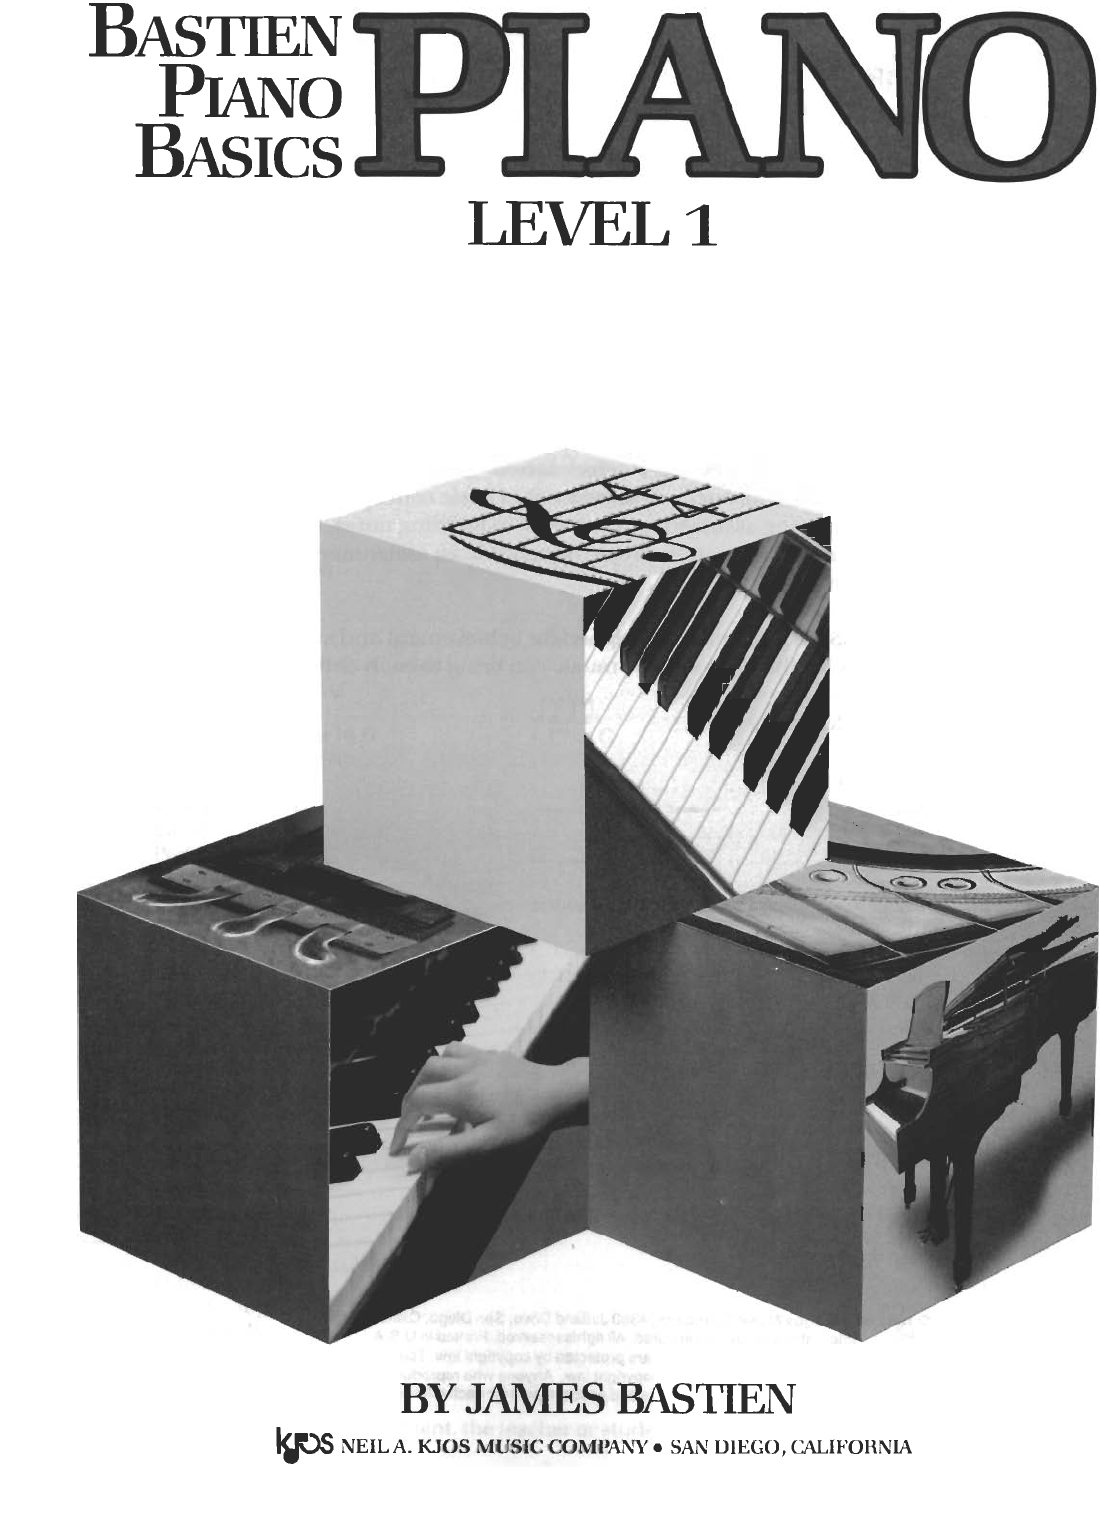 Bastien piano basics pdf